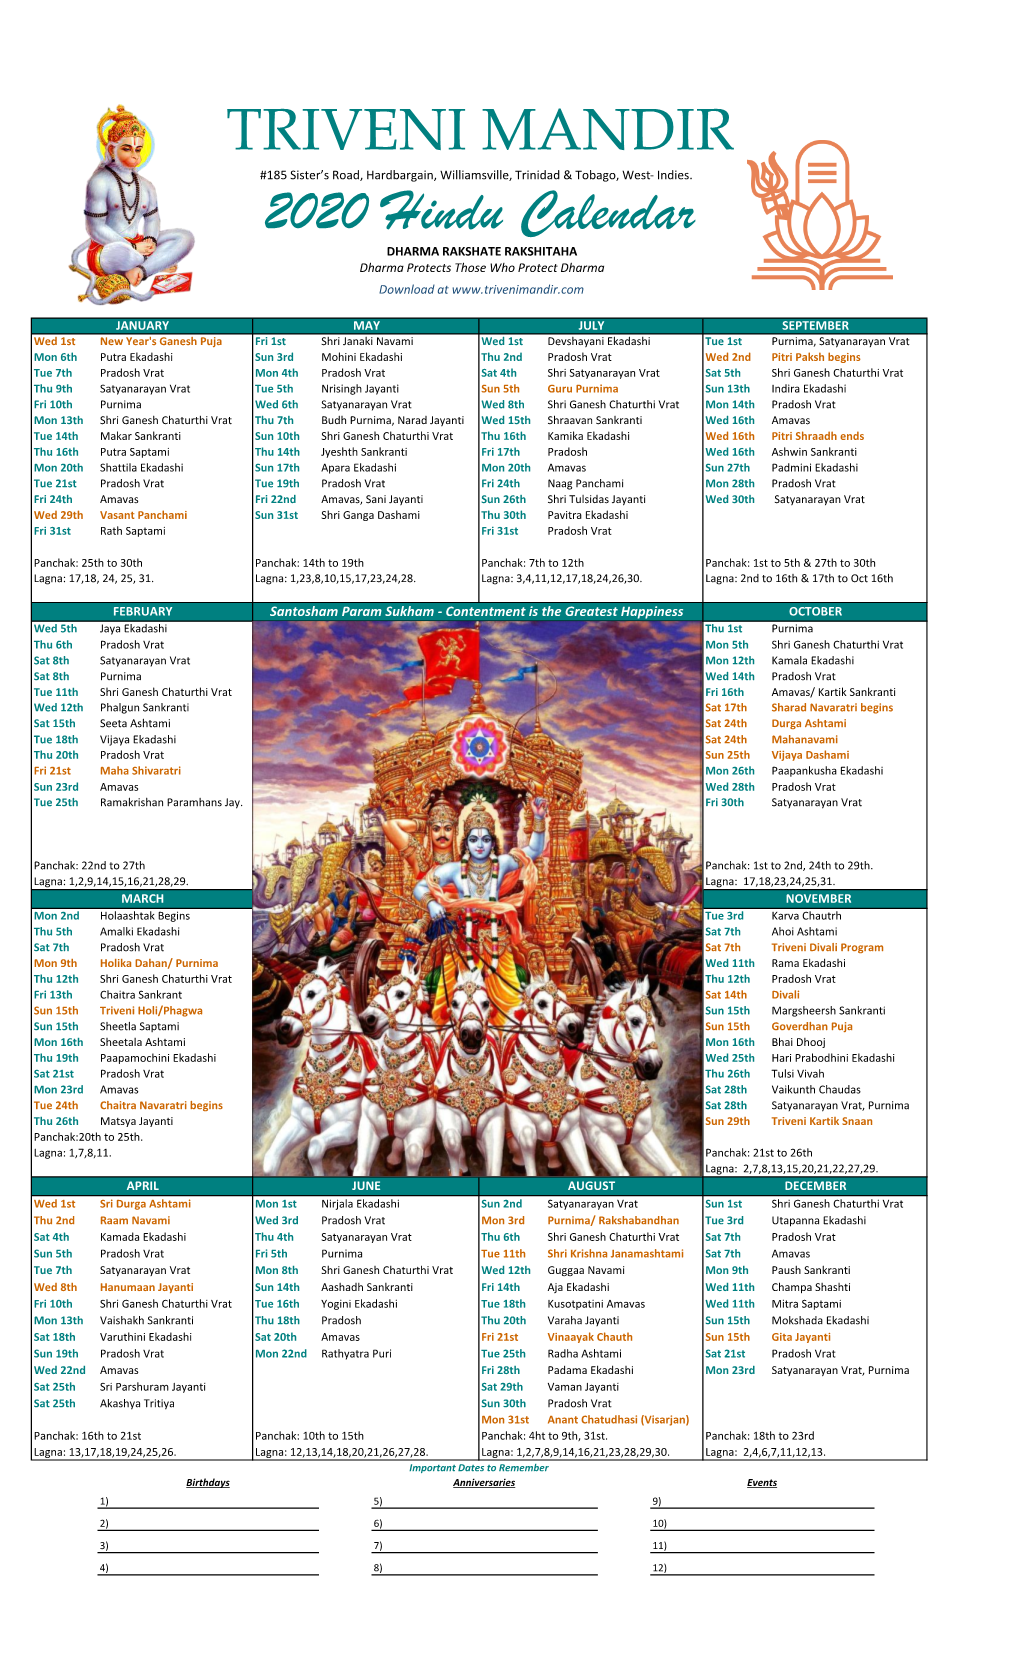 TRIVENI MANDIR 2020 Hindu Calendar